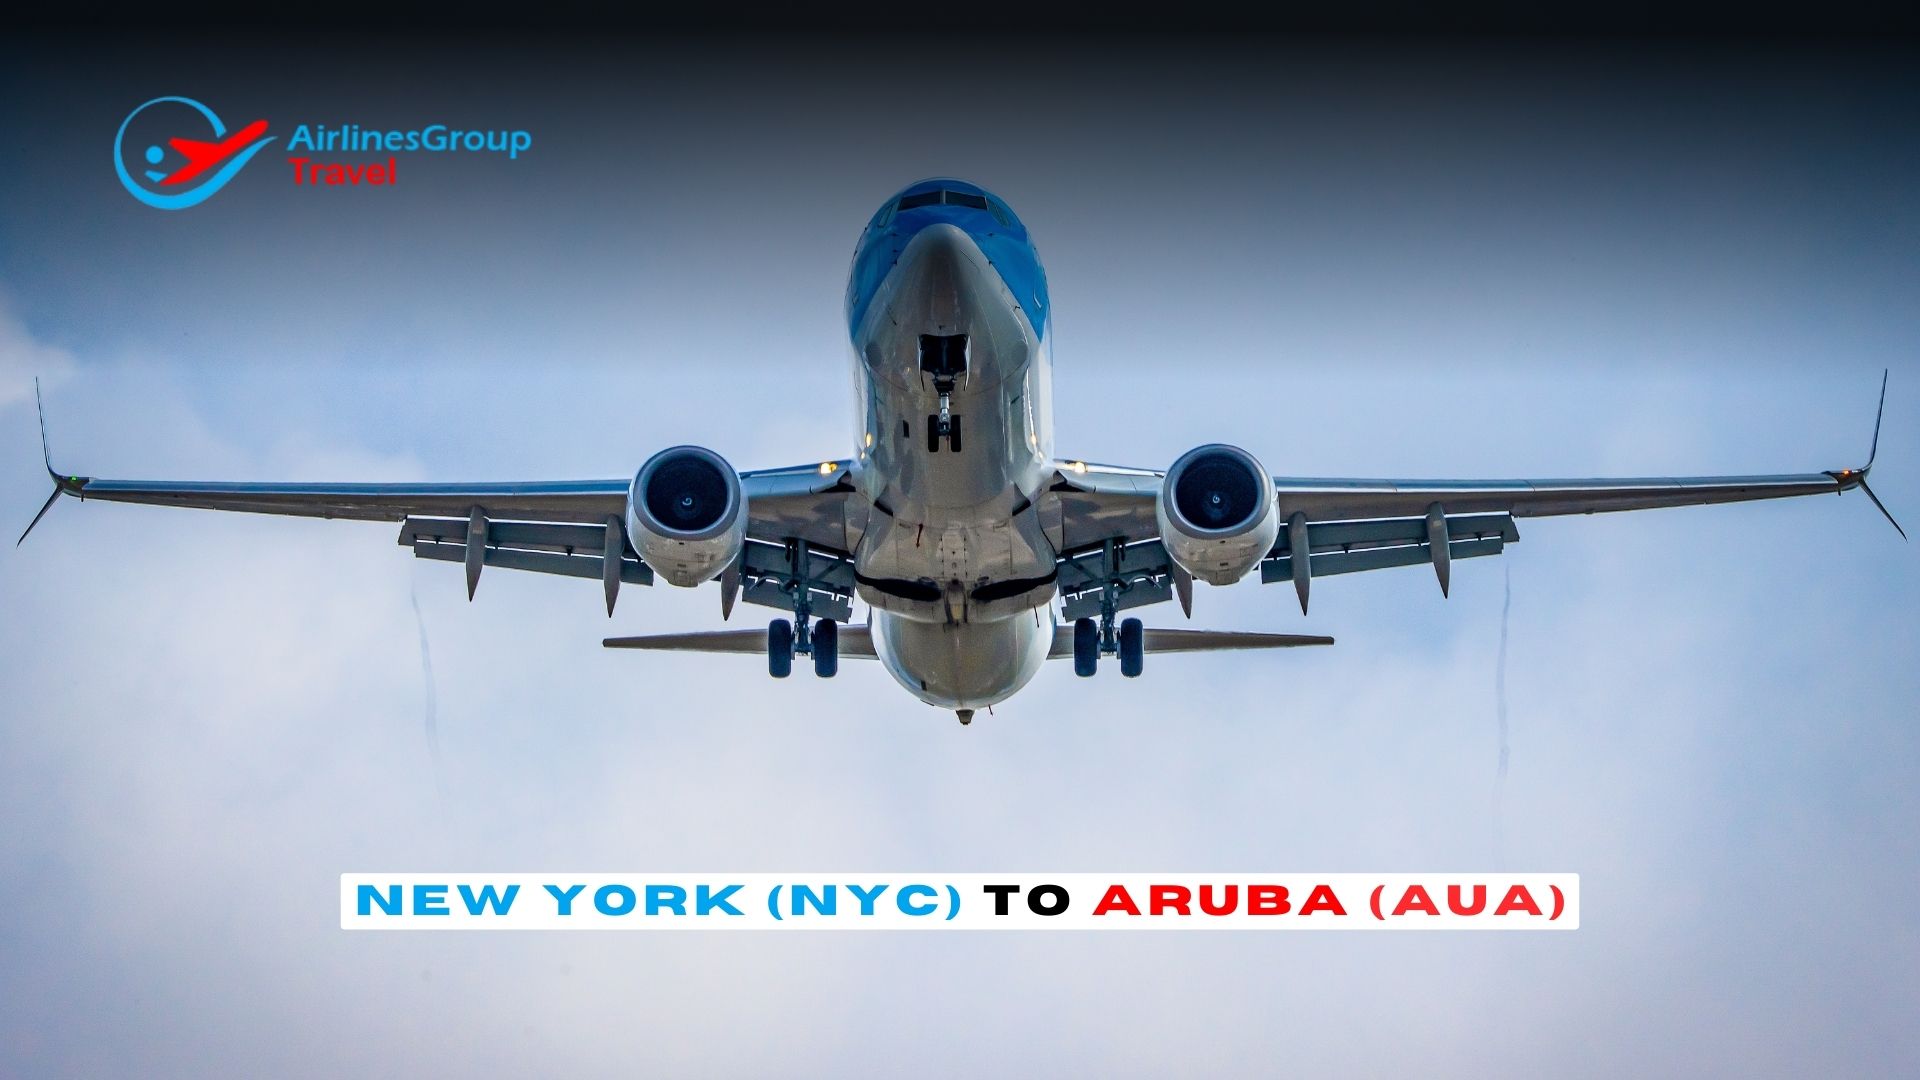 New York to Aruba